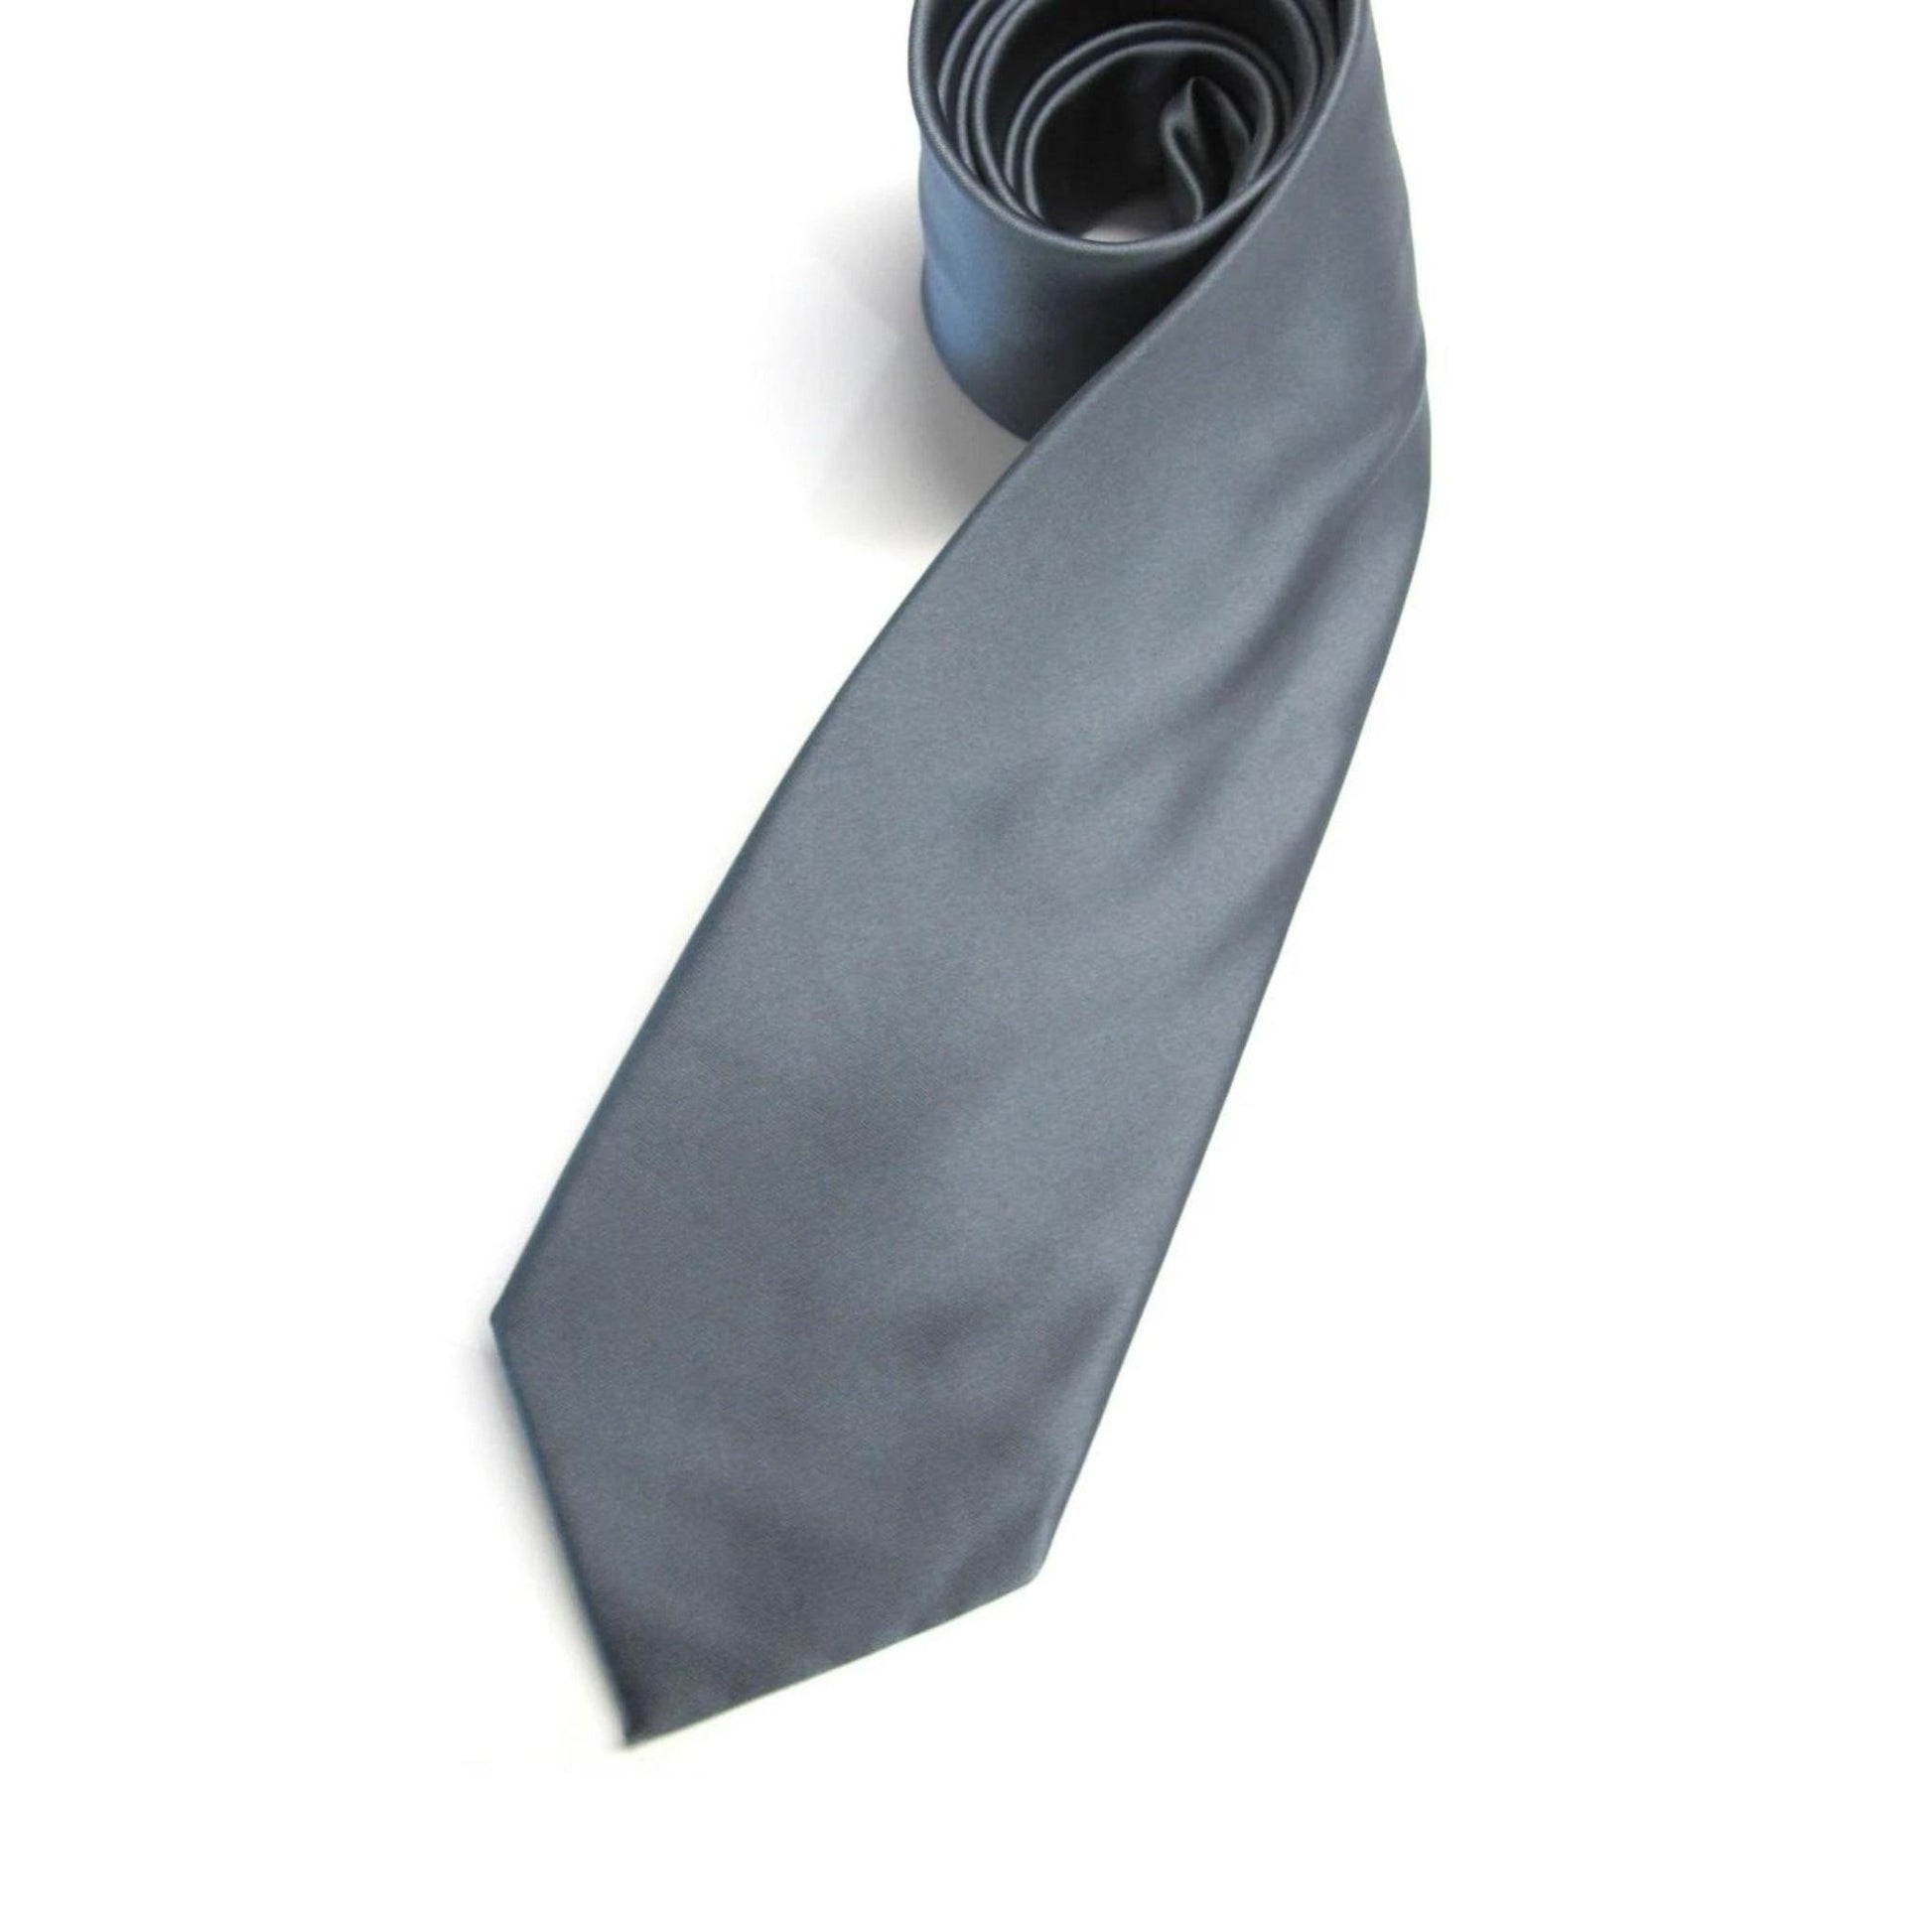 YOUTH ROBE Neck Tie (Grey) - YOUTH ROBE